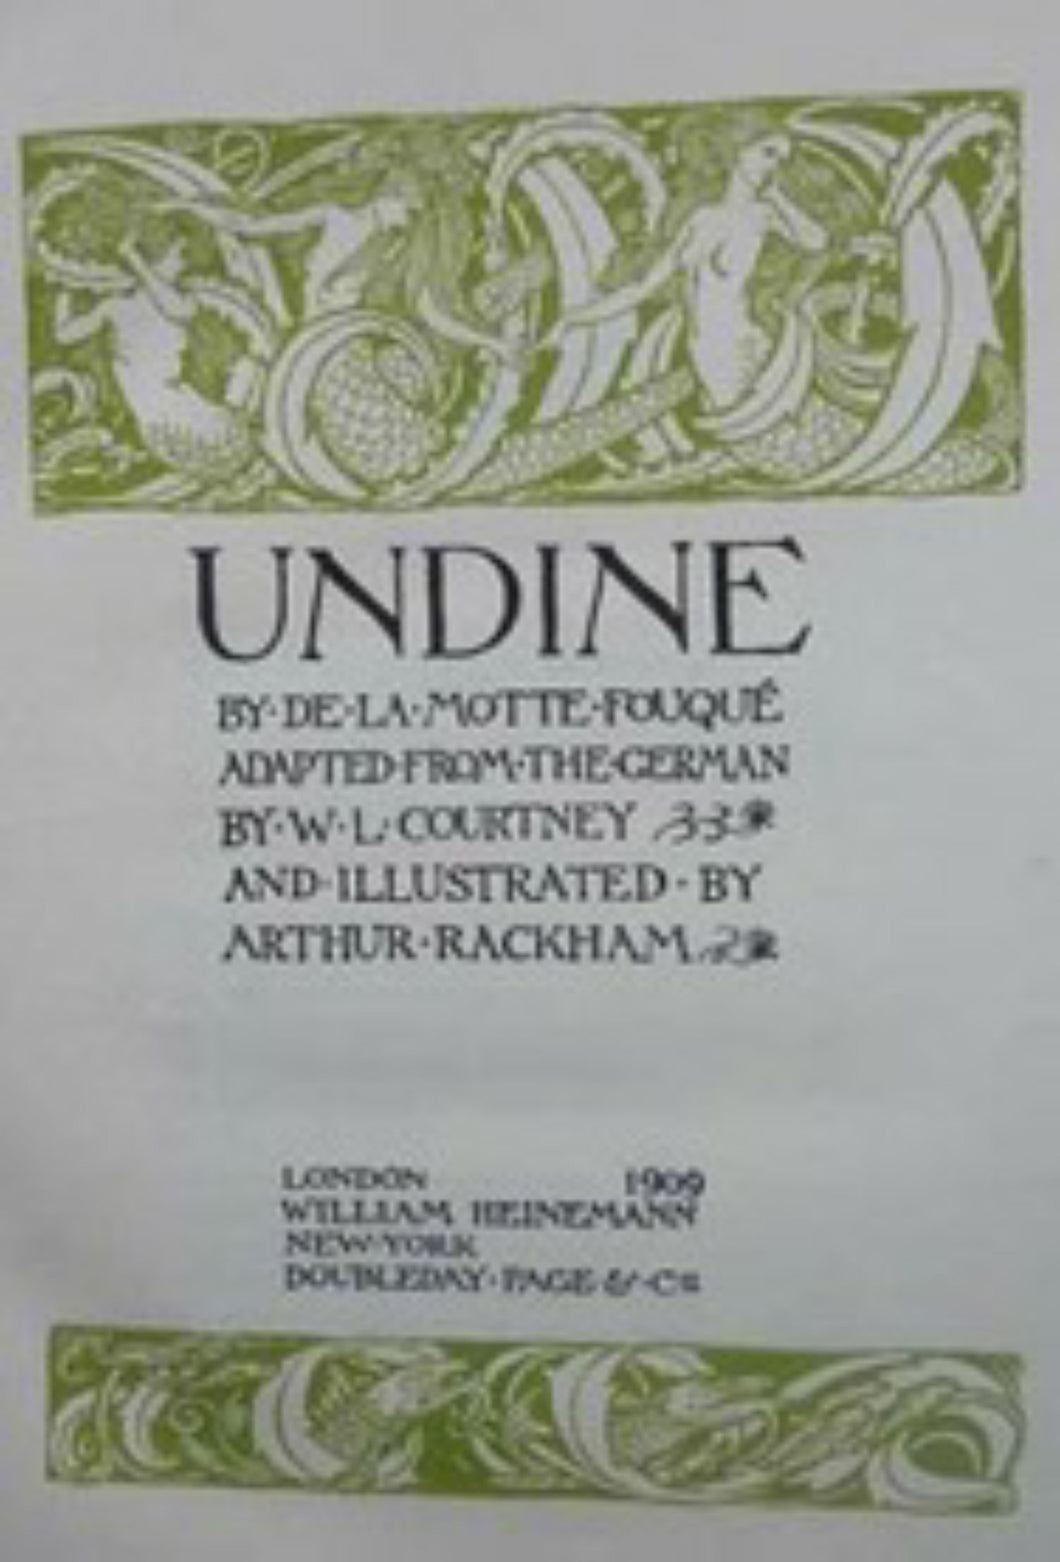 1909: ARTHUR RACKHAM Illustrations. Very Rare Limited Edition, SIGNED Copy of Undine